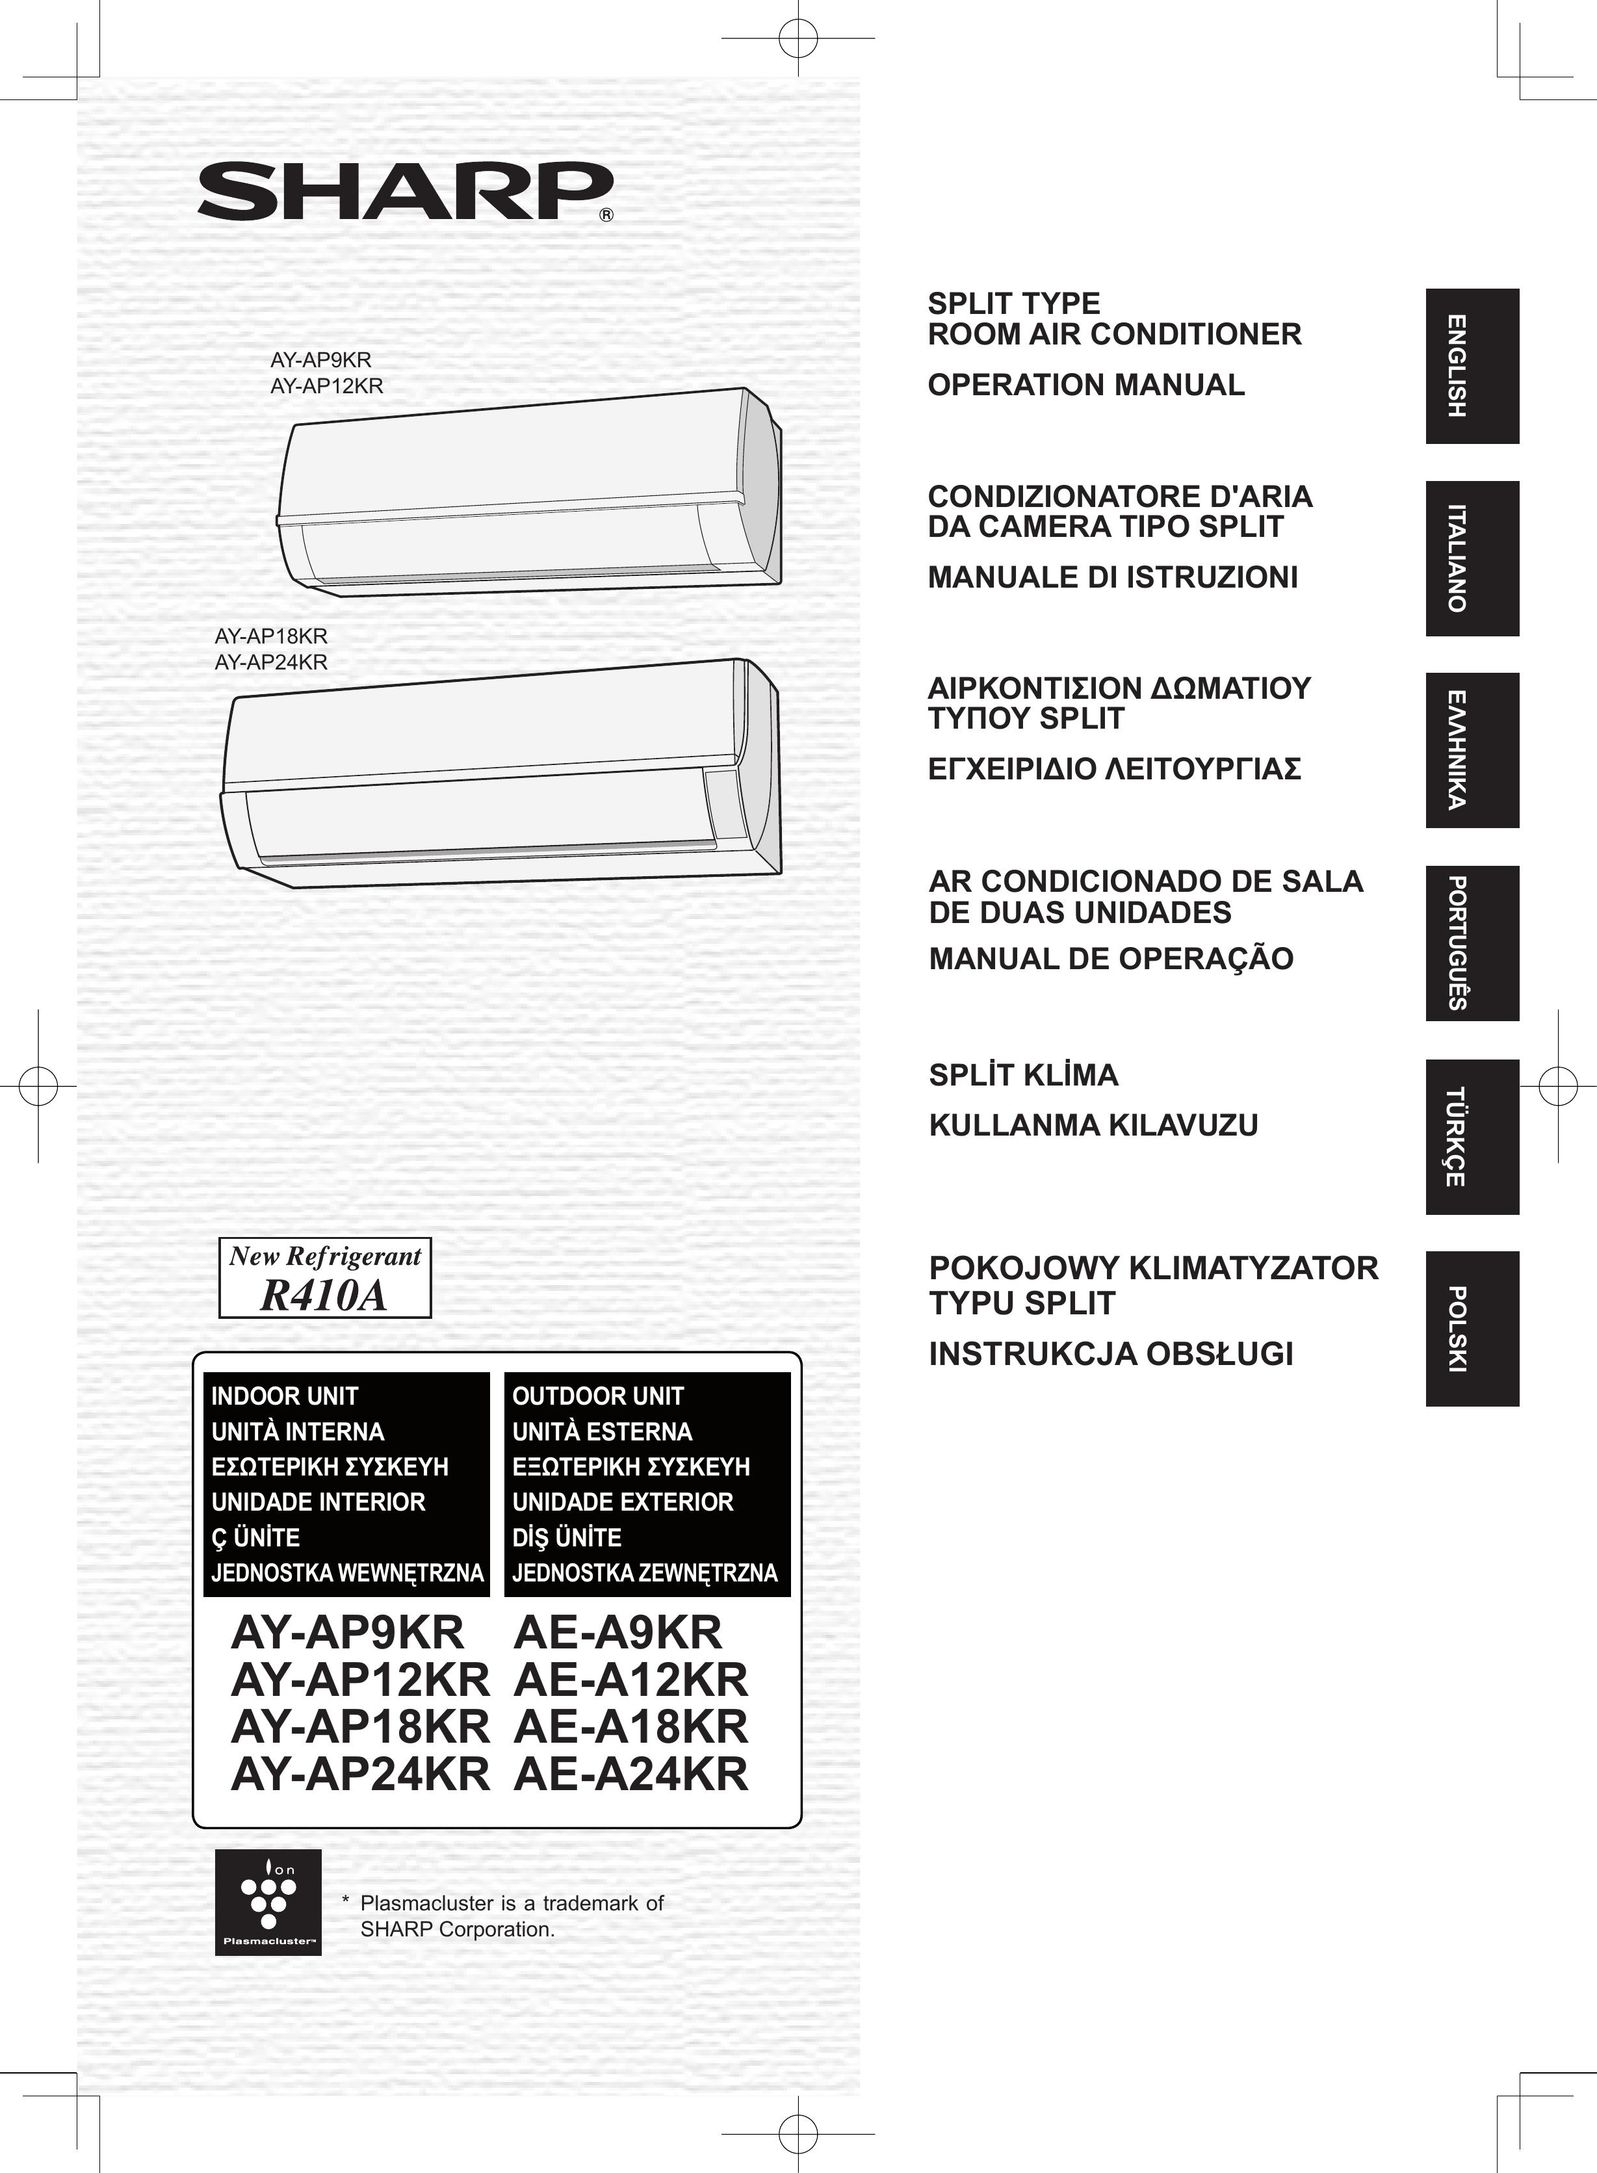 Sharp AE-A18KR Air Conditioner User Manual